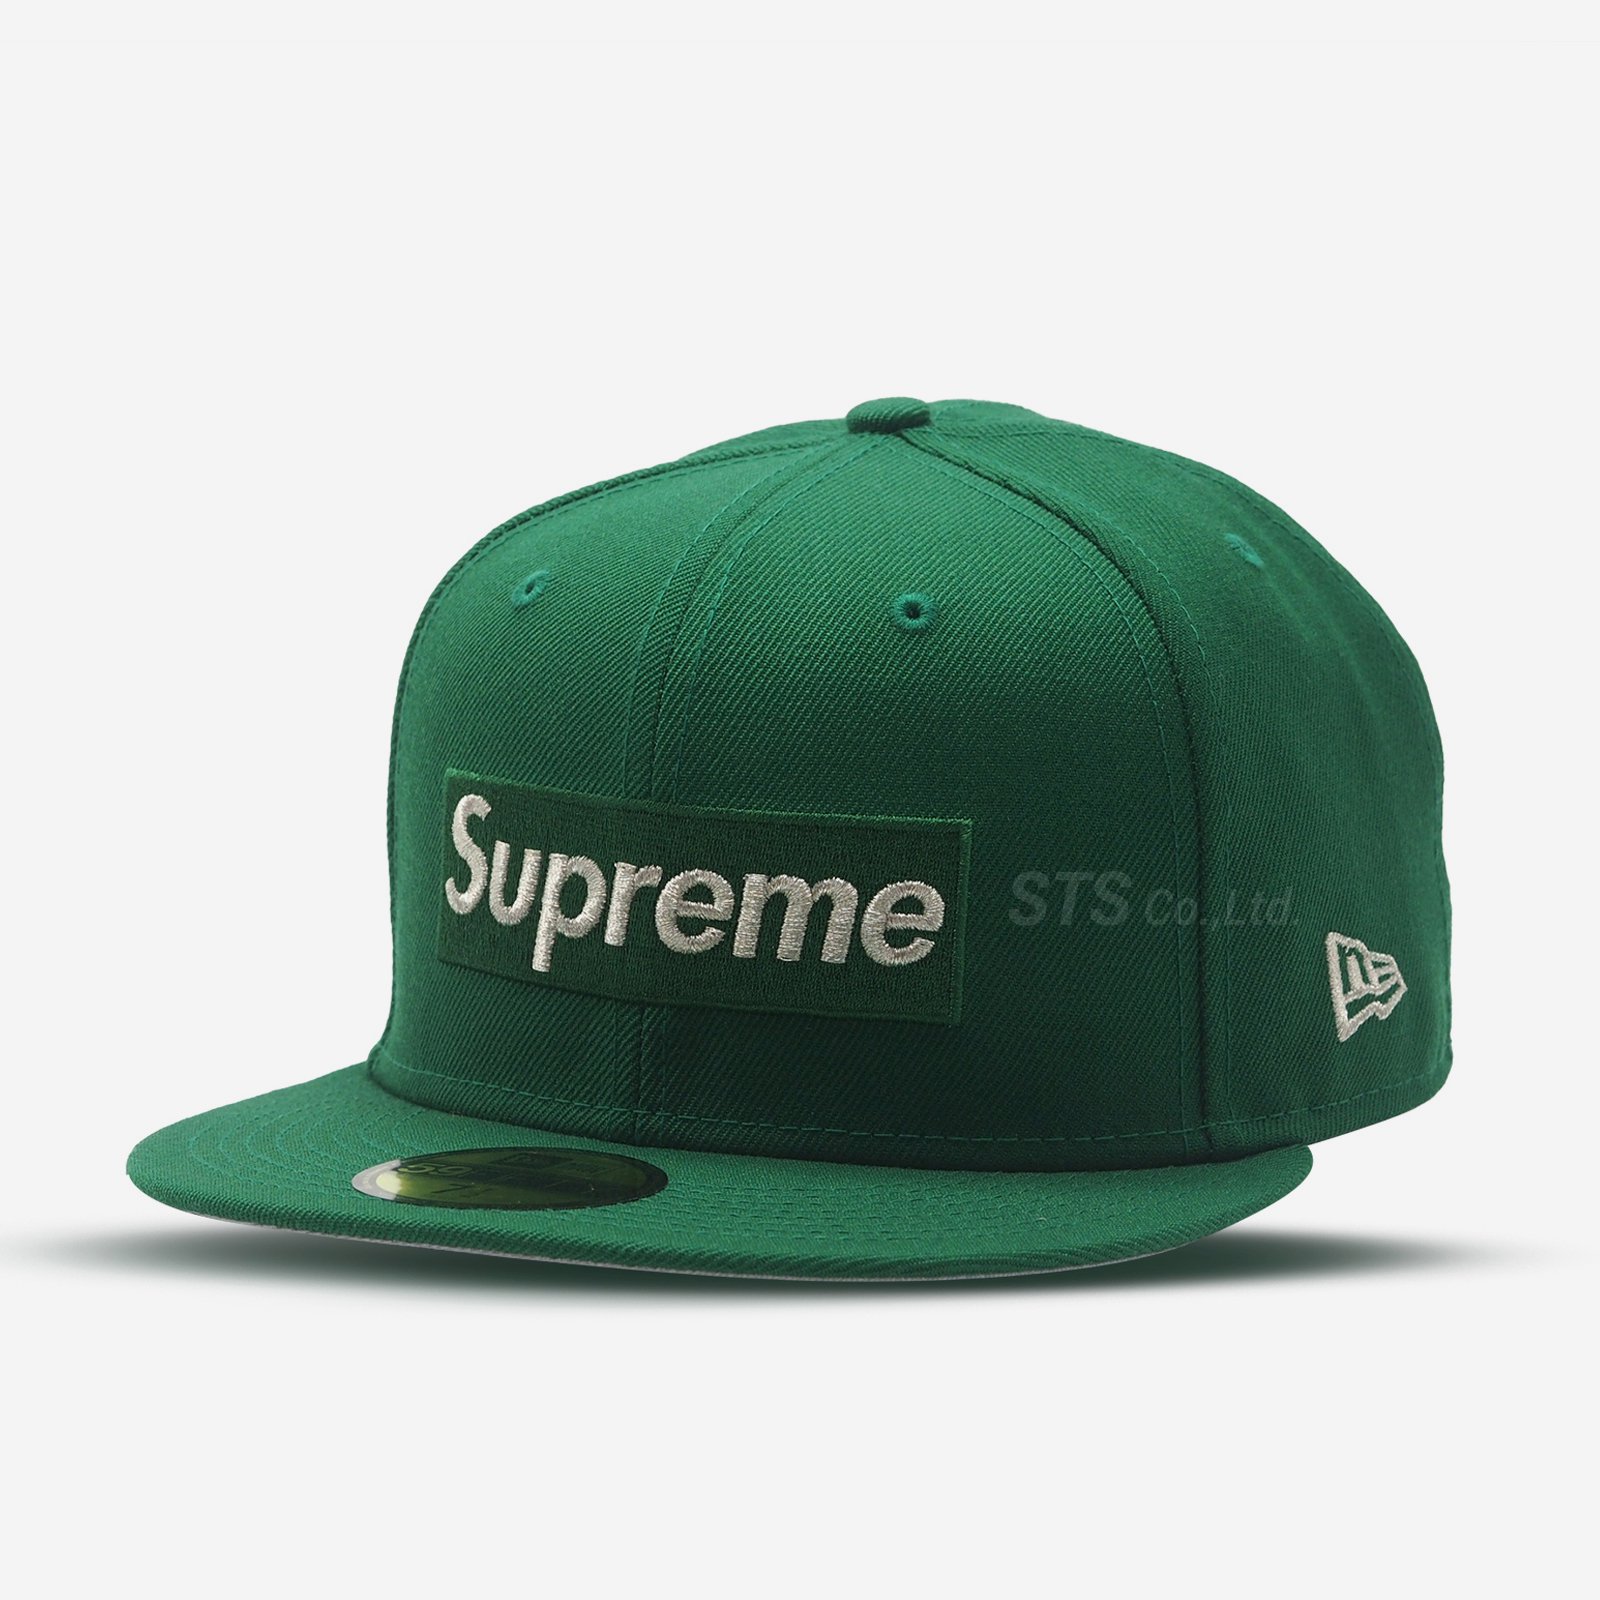 Supreme New Era $1M Metallic Box Logo Cap Green Fitted 7 3/8 